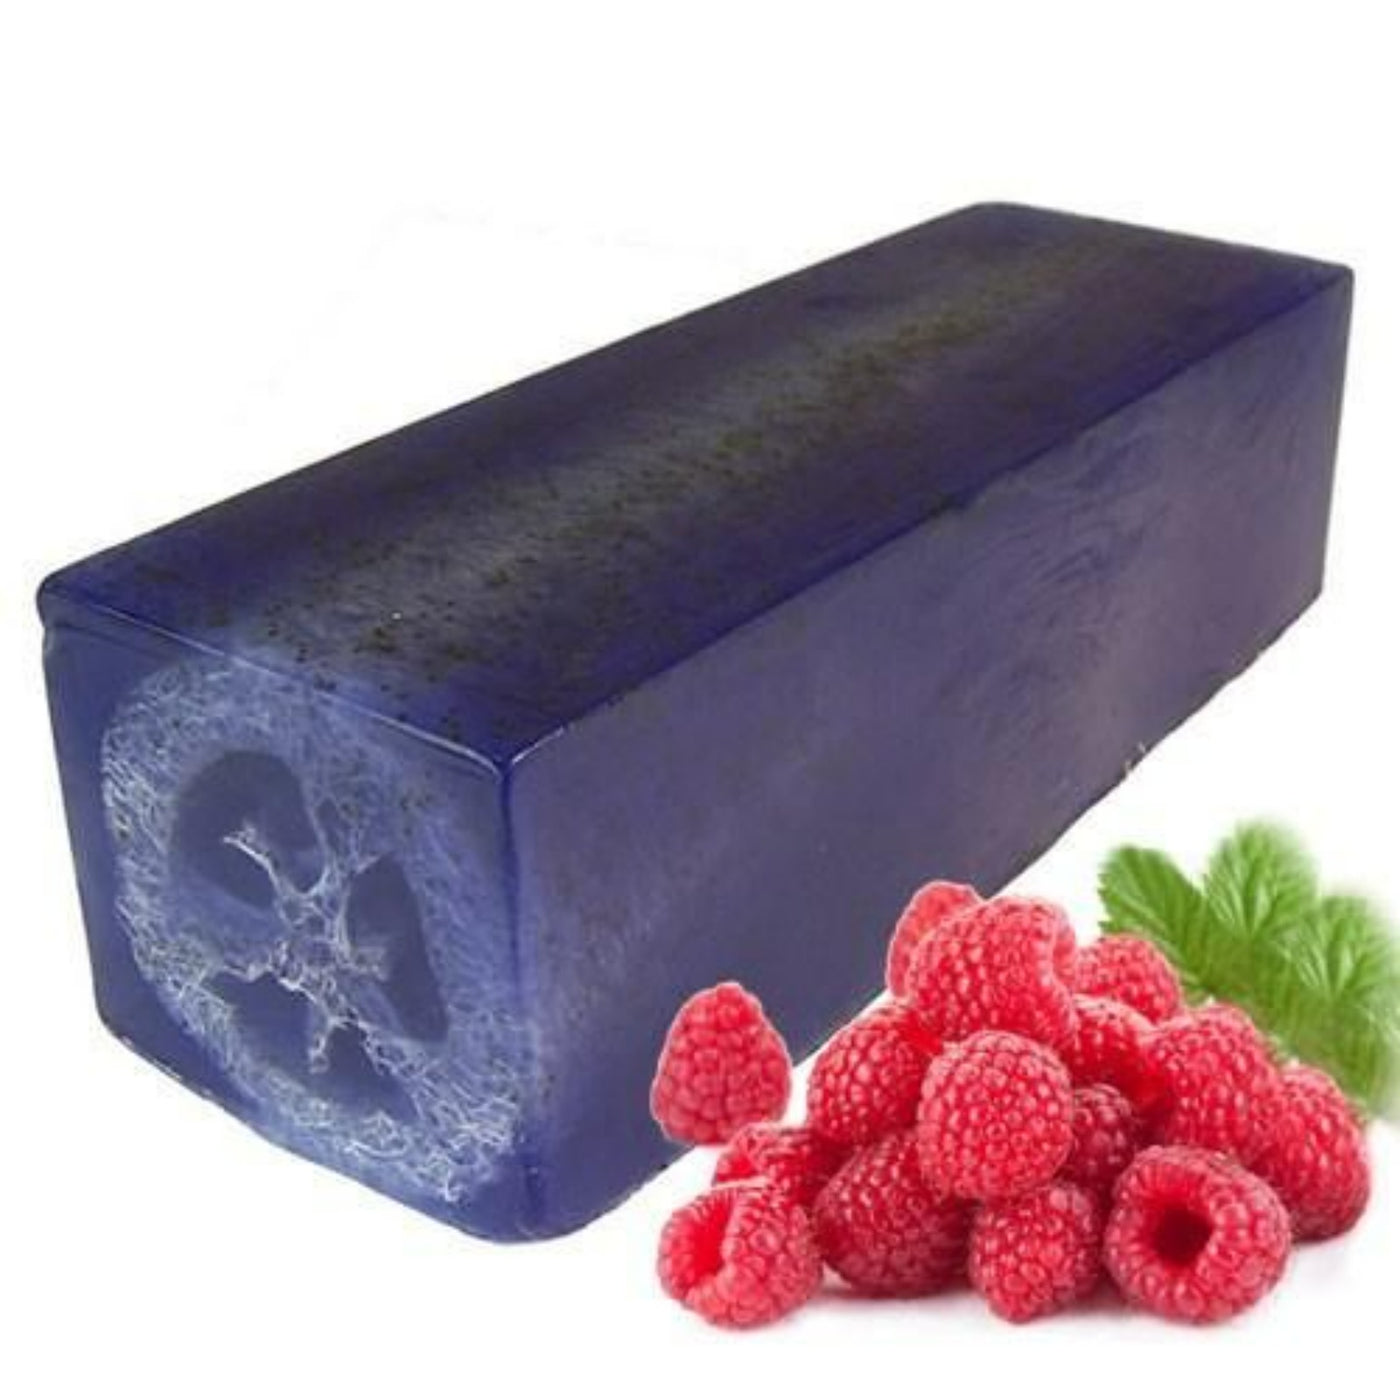 Loofah Exfoliating Soap Loaf - A Right Raspberry Rub 1.5kg.